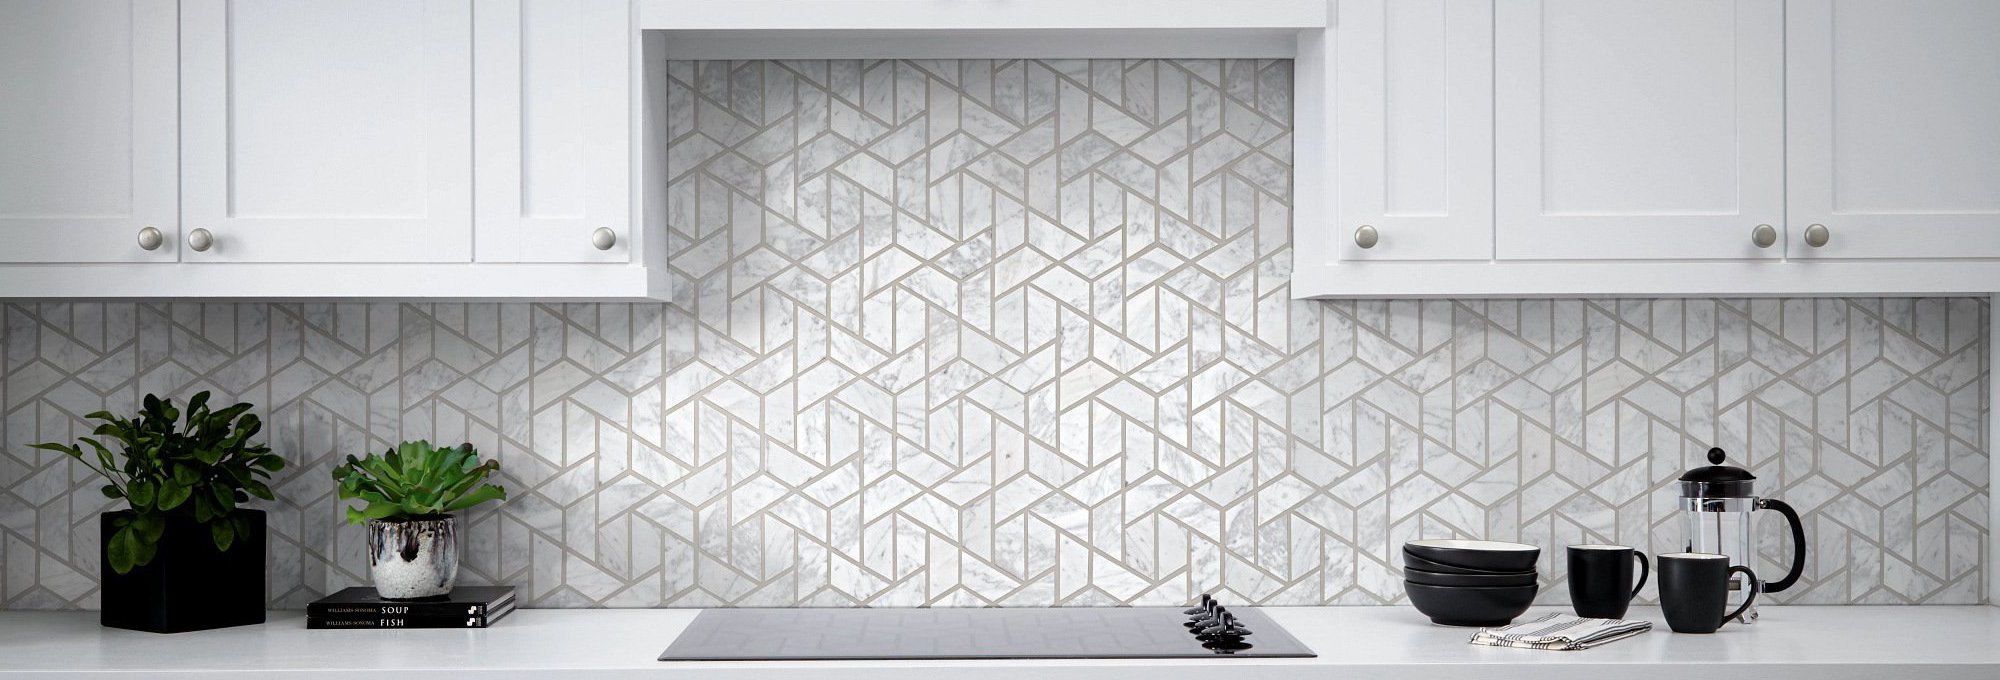 Tiled Kitchen Backsplash from Gerami's Floors in Lafayette